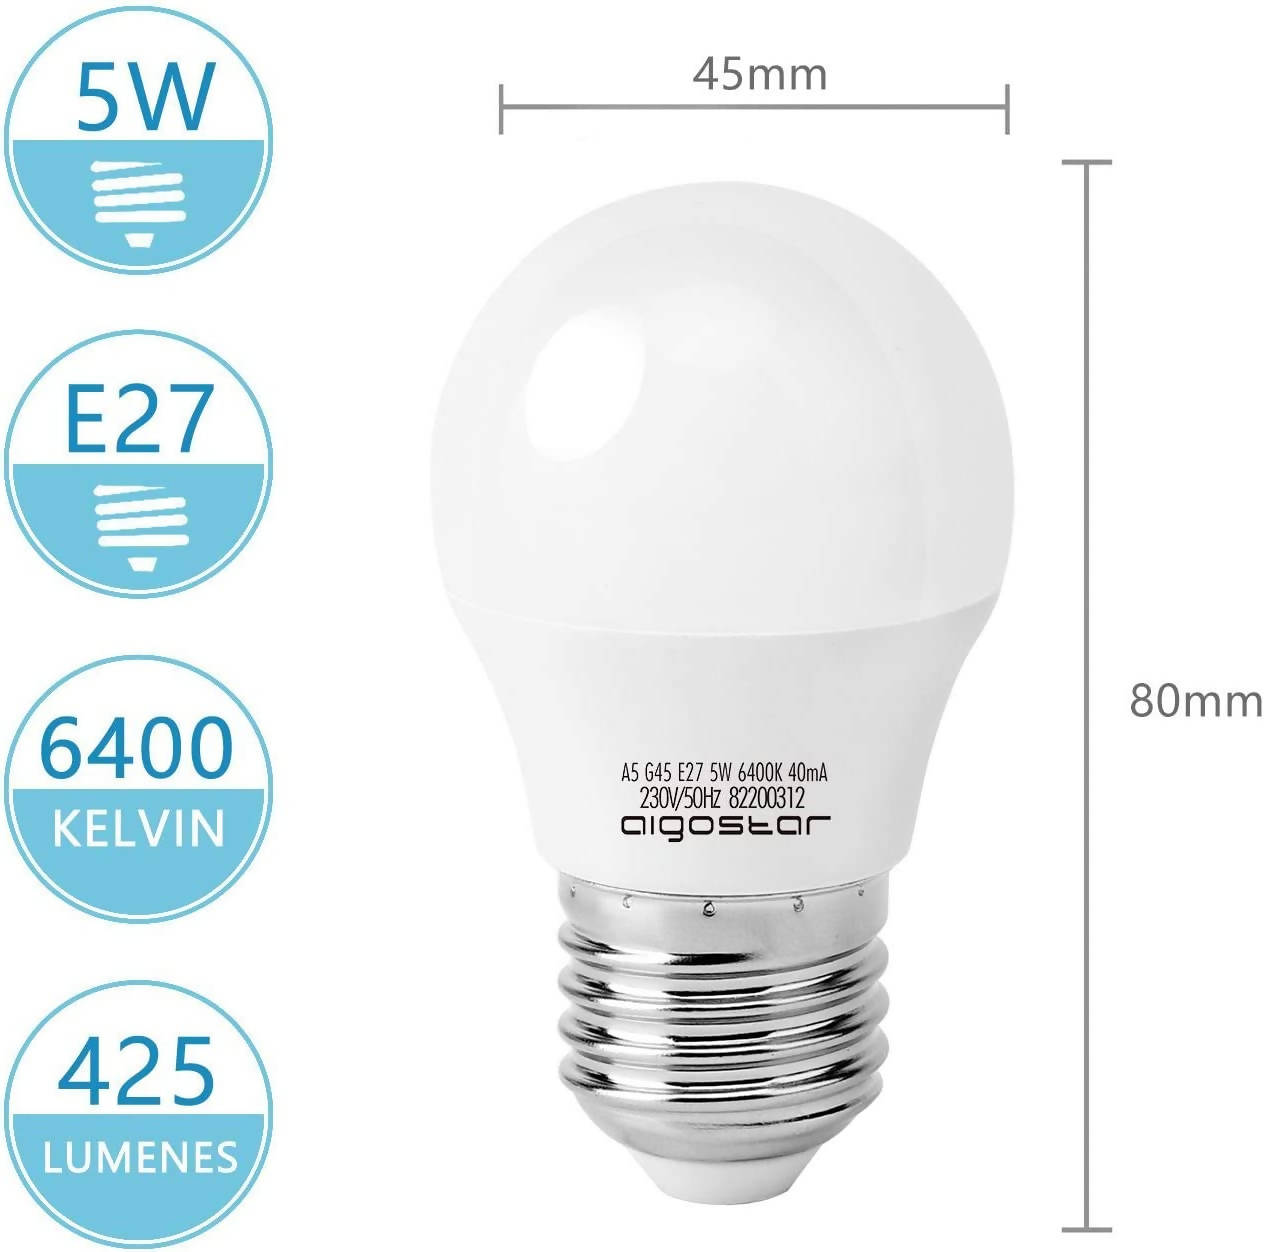 Aigostar E27 LED Bulb 5 W, Cool White 6400 K, 425 Lumens, Lamp G45 Bulb E27, 230 Degree Beam Angle, Non-Dimmable - Set of 10